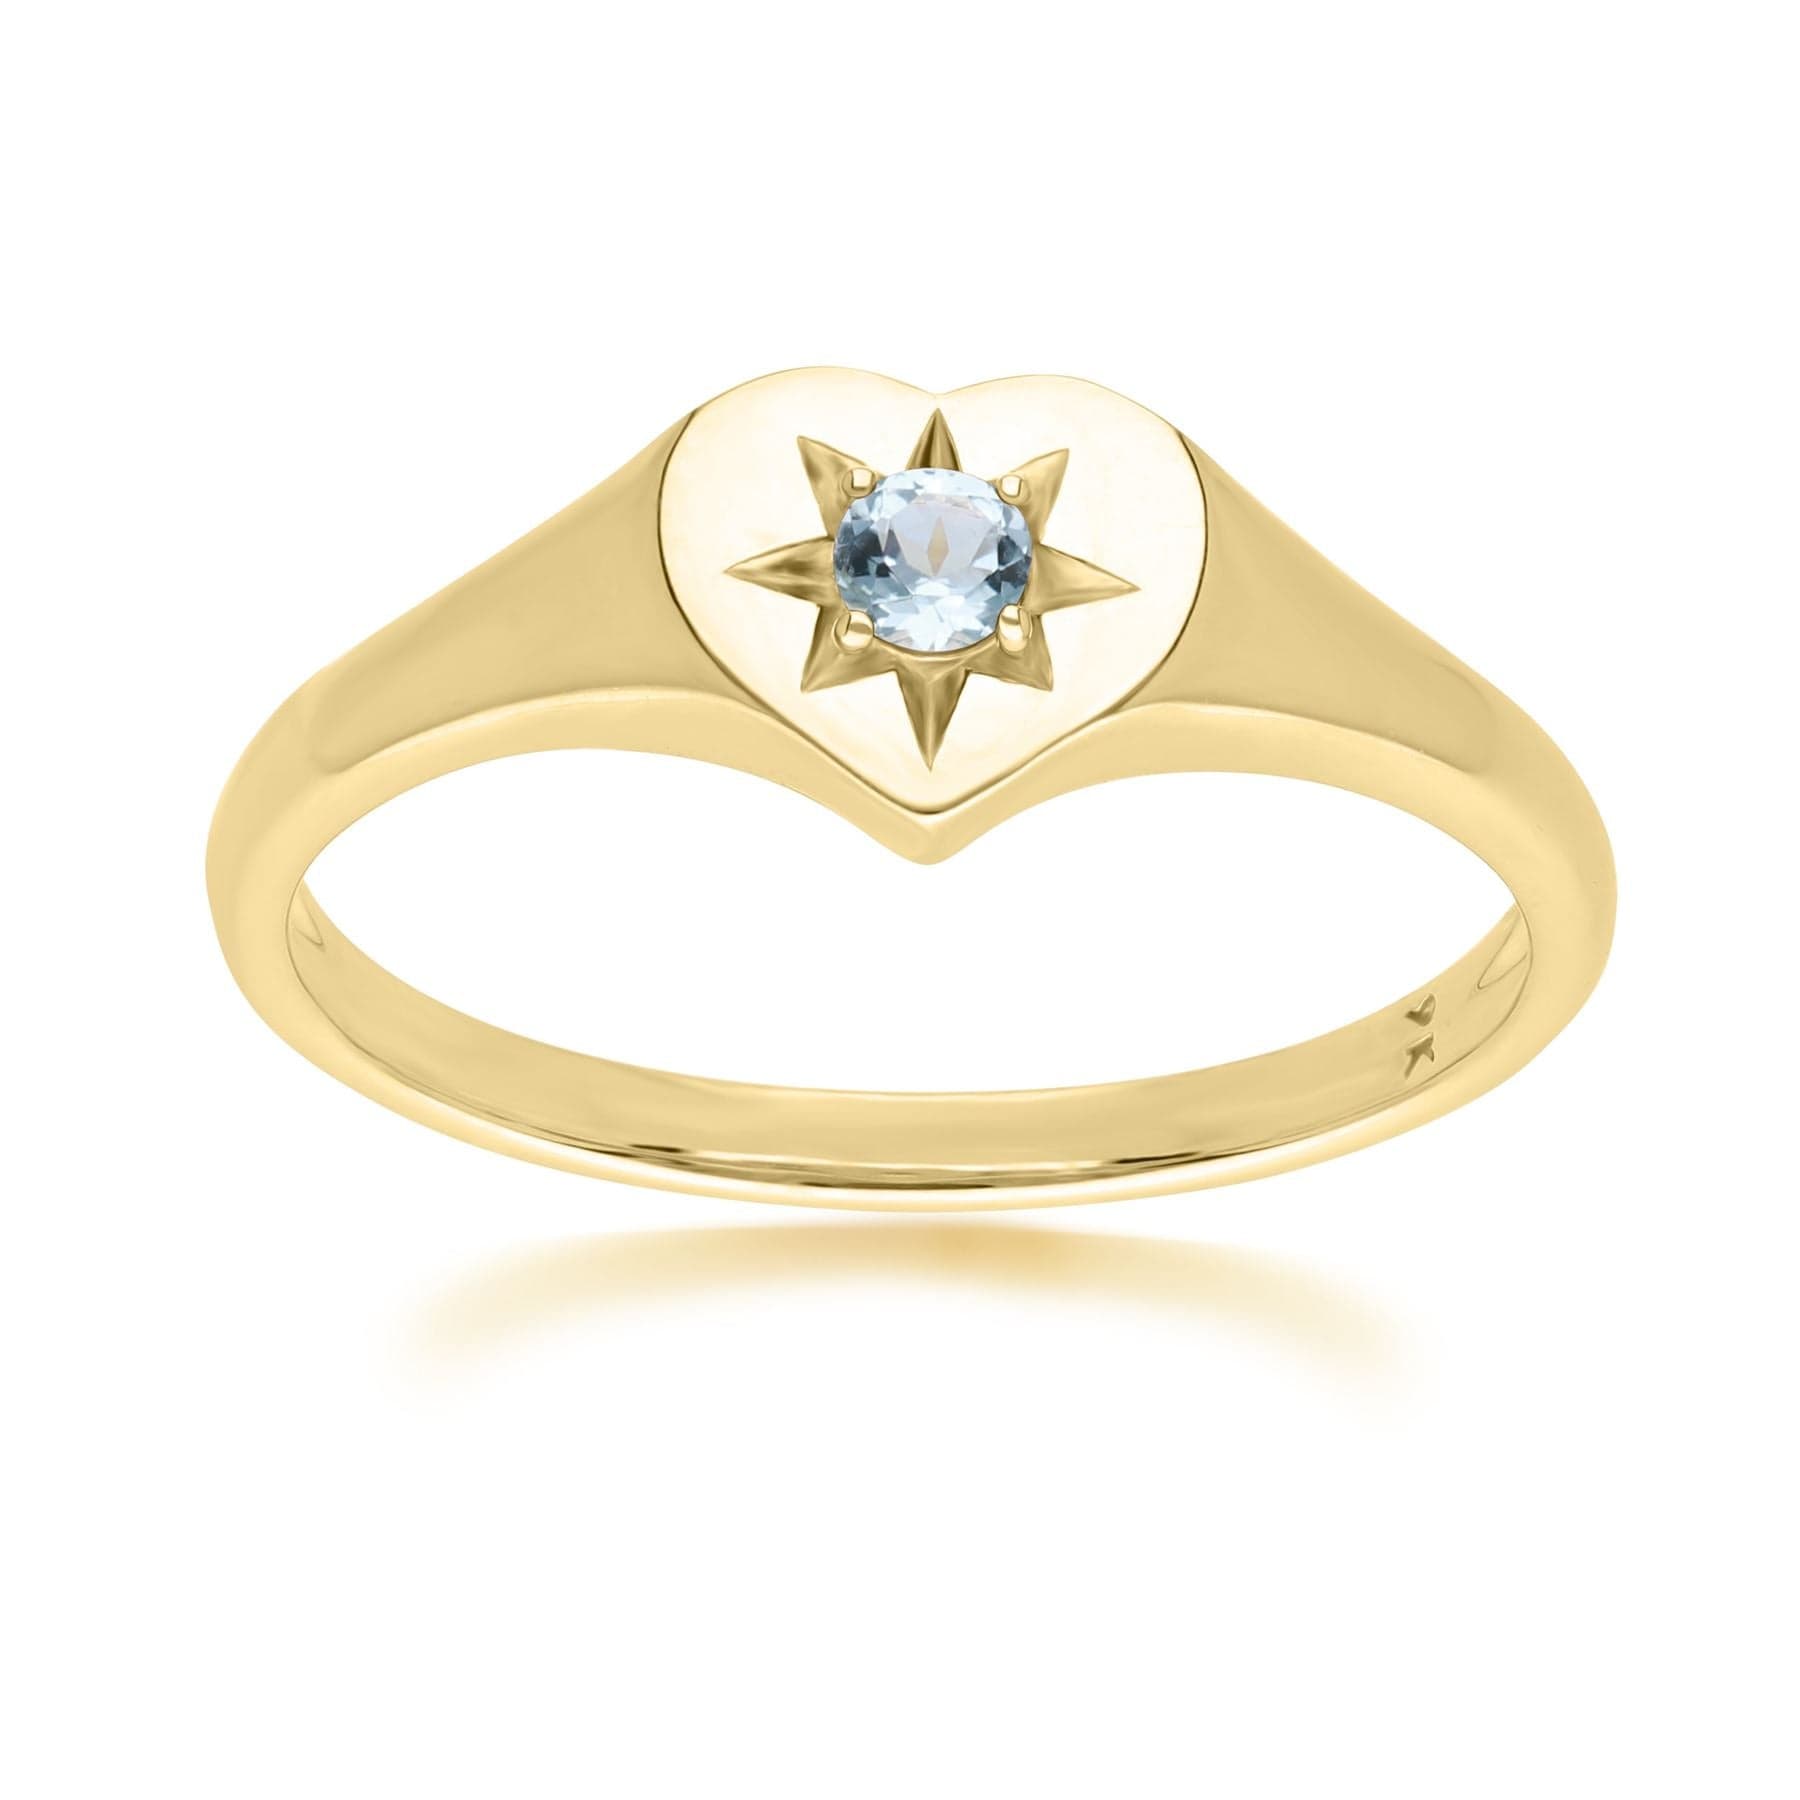 ECFEW™ 'The Liberator' Blue Topaz Heart Ring in 9ct Yellow Gold - Gemondo